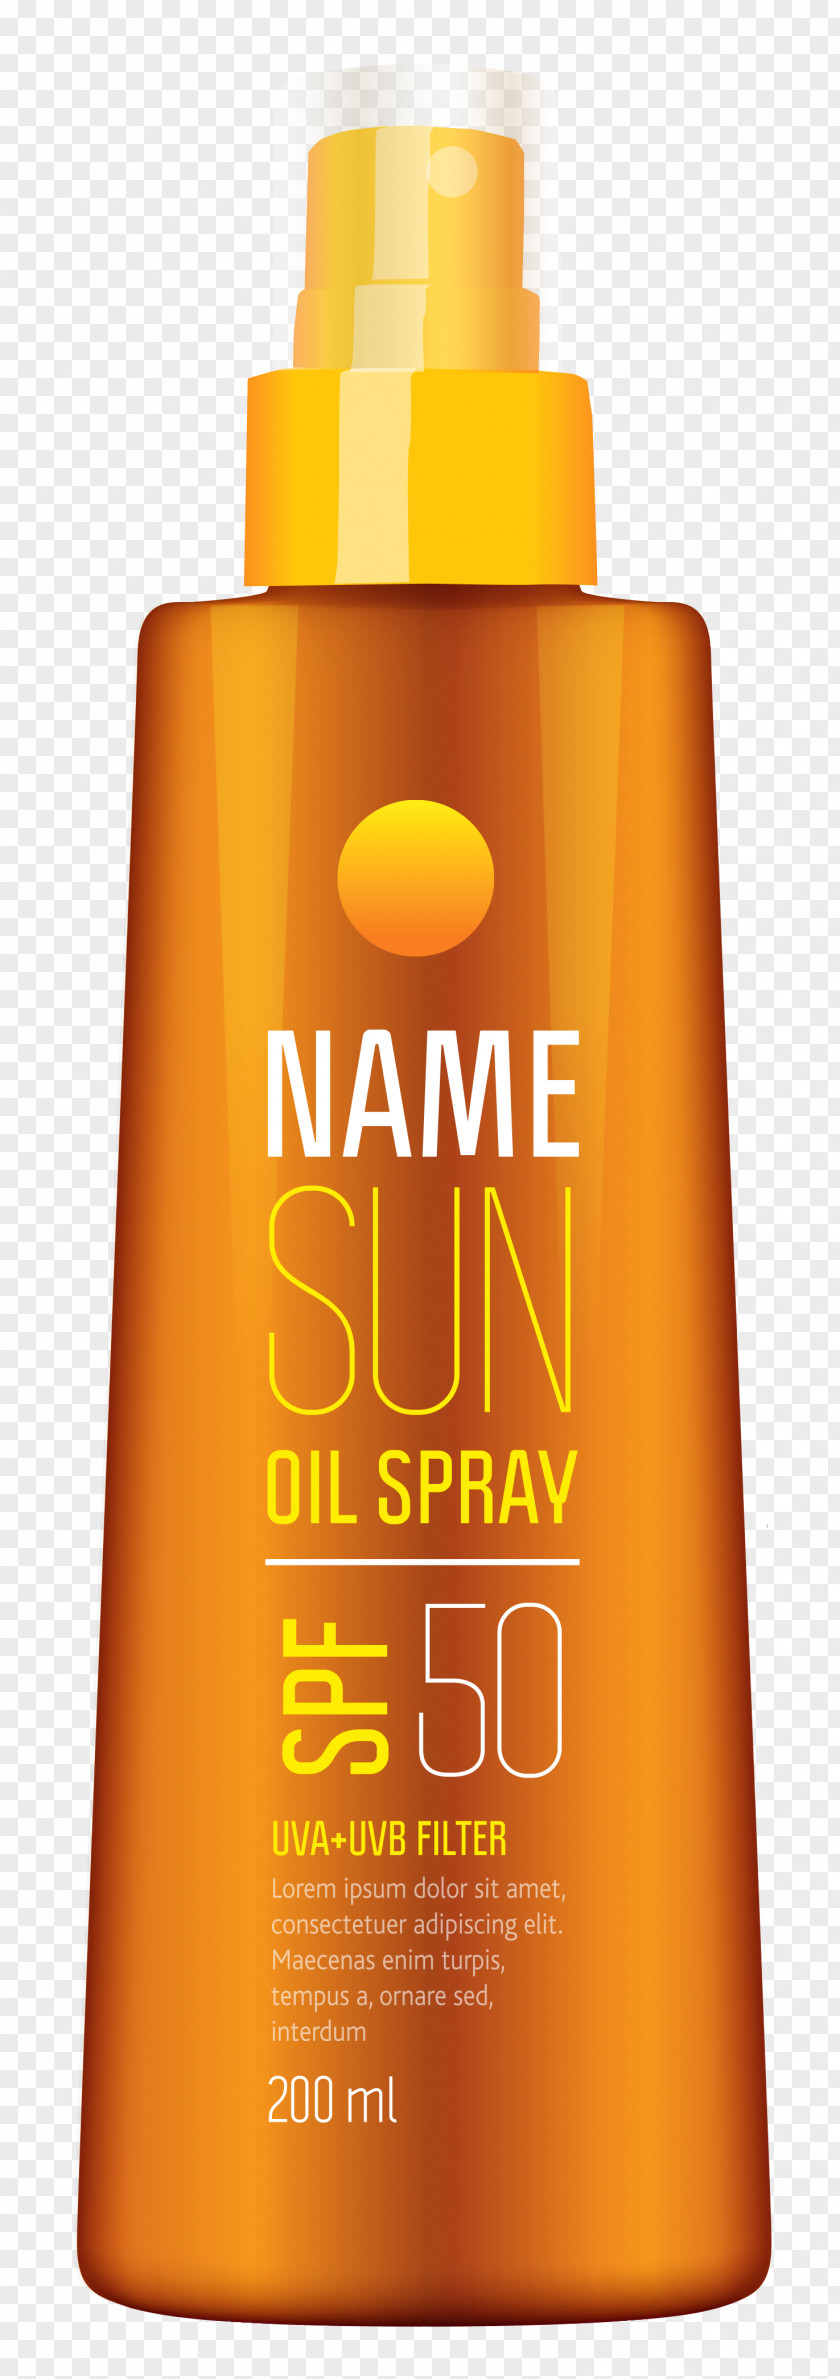 SPRAY Sunscreen Lotion Cosmetics Clip Art PNG